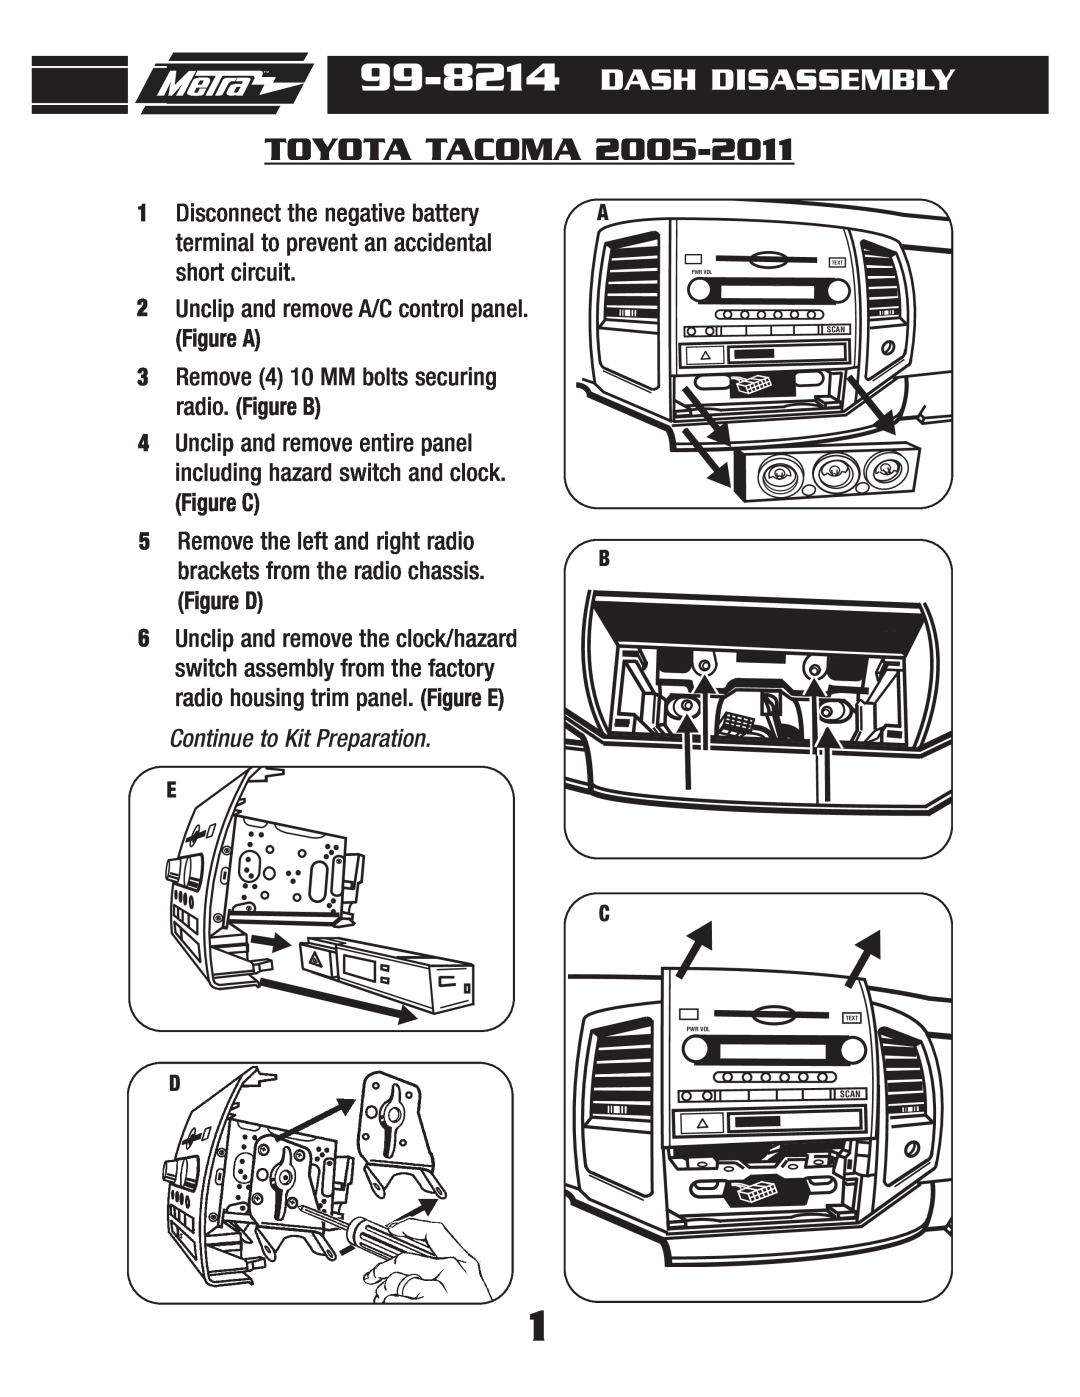 Metra Electronics 99-8214TB Toyota Tacoma, Dash Disassembly, Figure A, Figure C, Figure D, Continue to Kit Preparation 